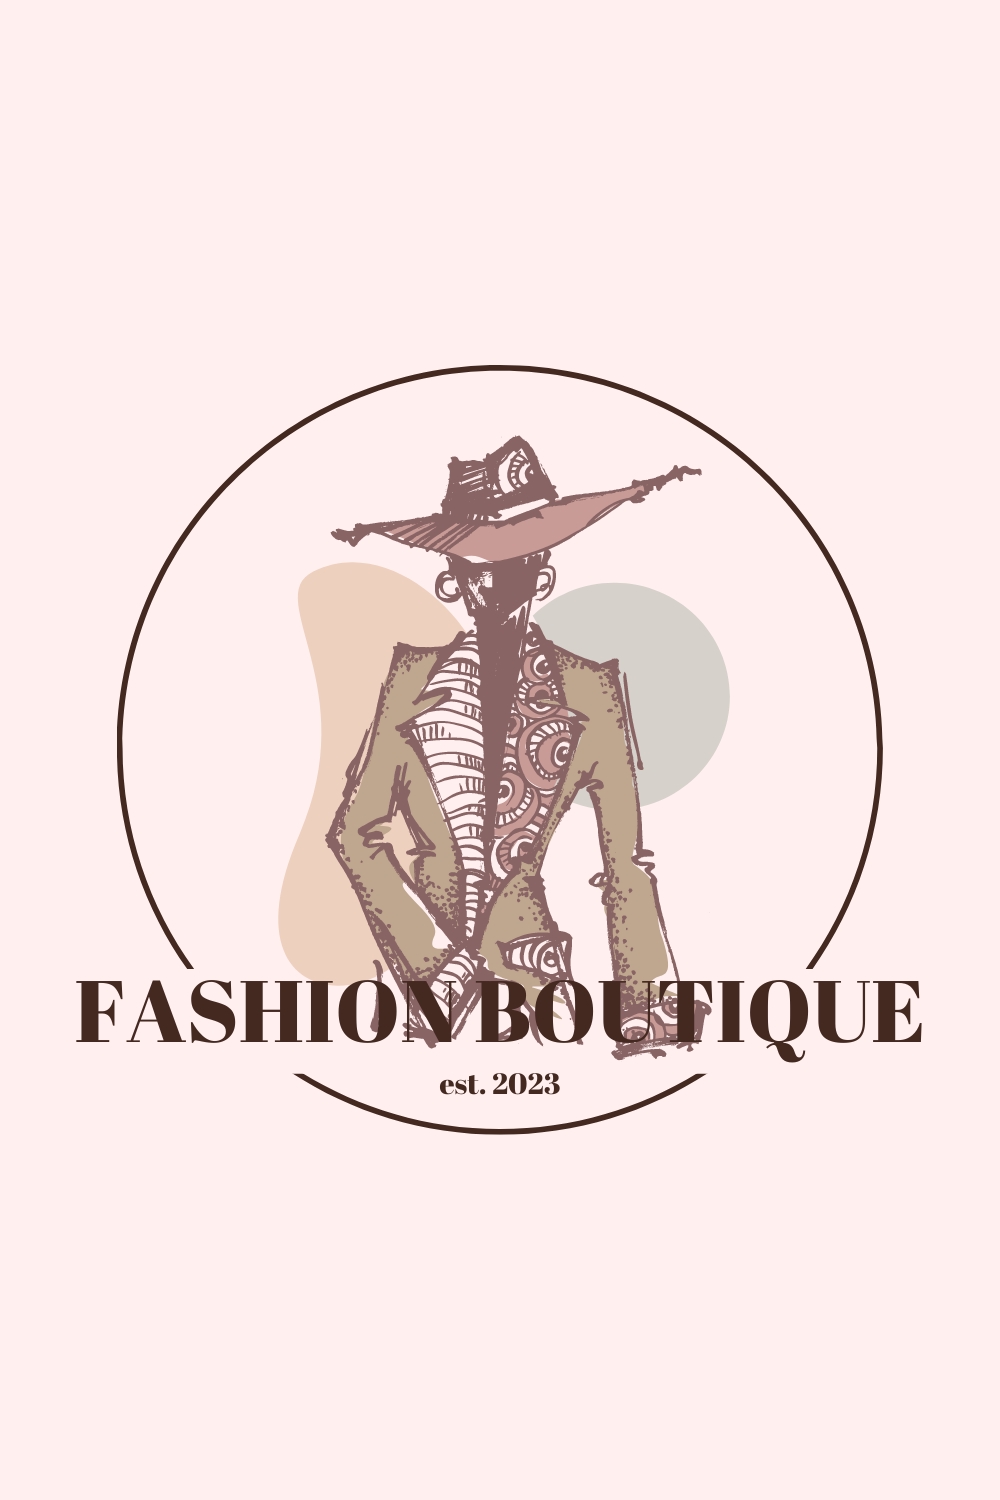 Fashion Boutique - Logo template pinterest preview image.